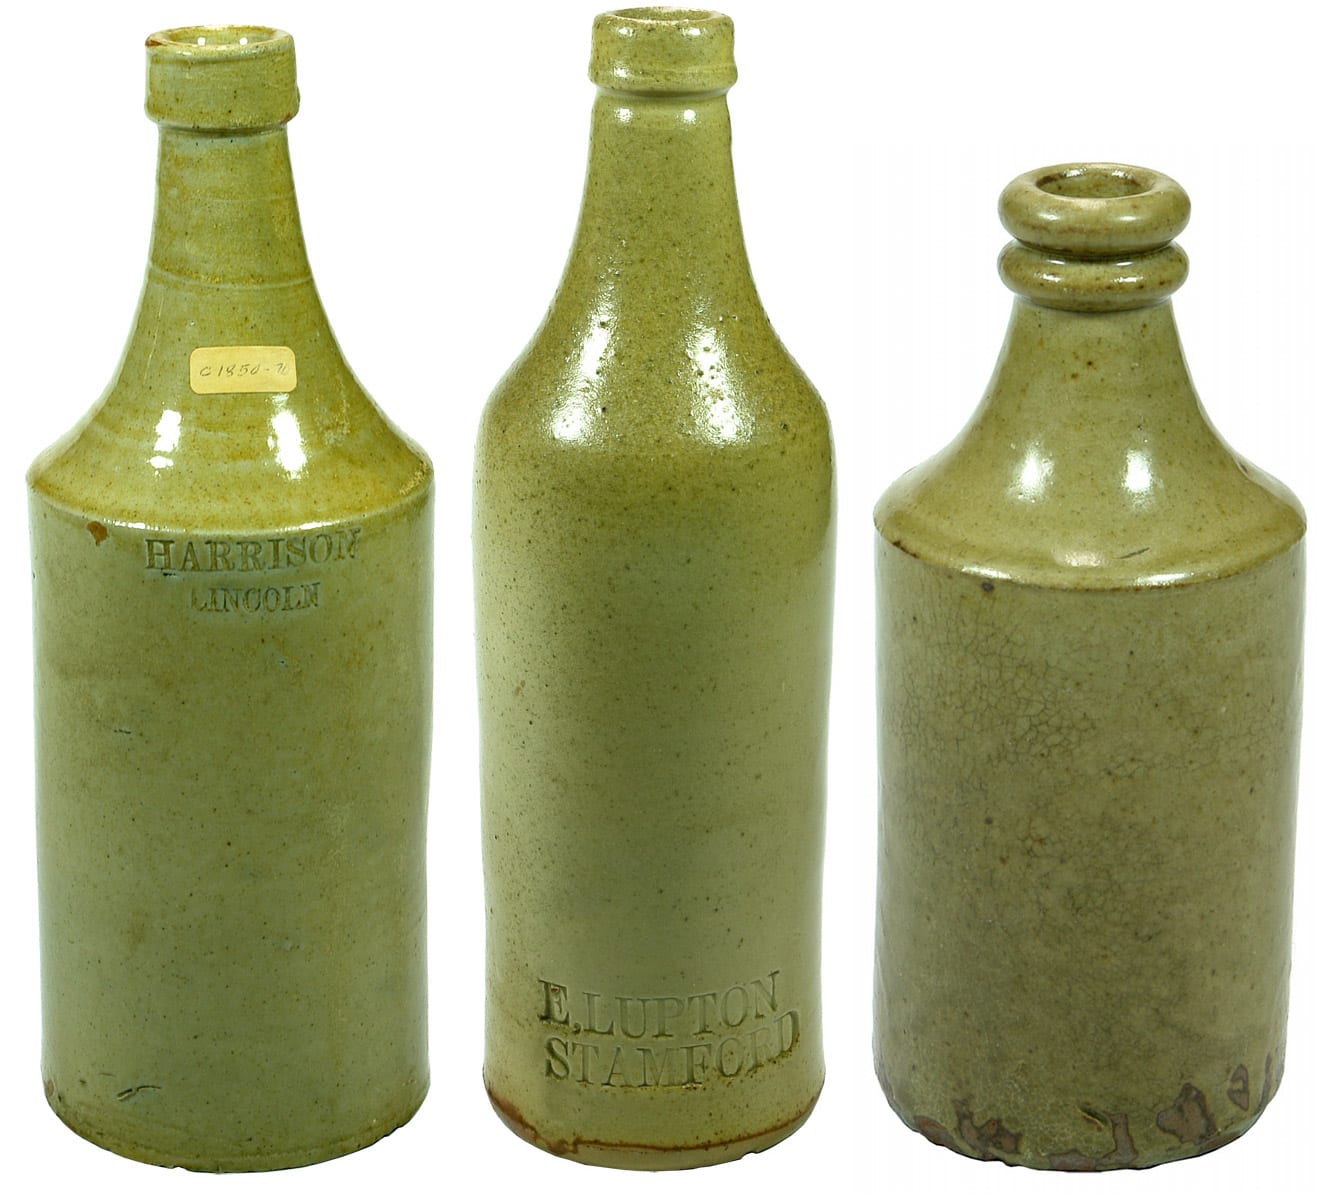 Harrison Lupton Lincoln Stamford Impressed Stout Bottles